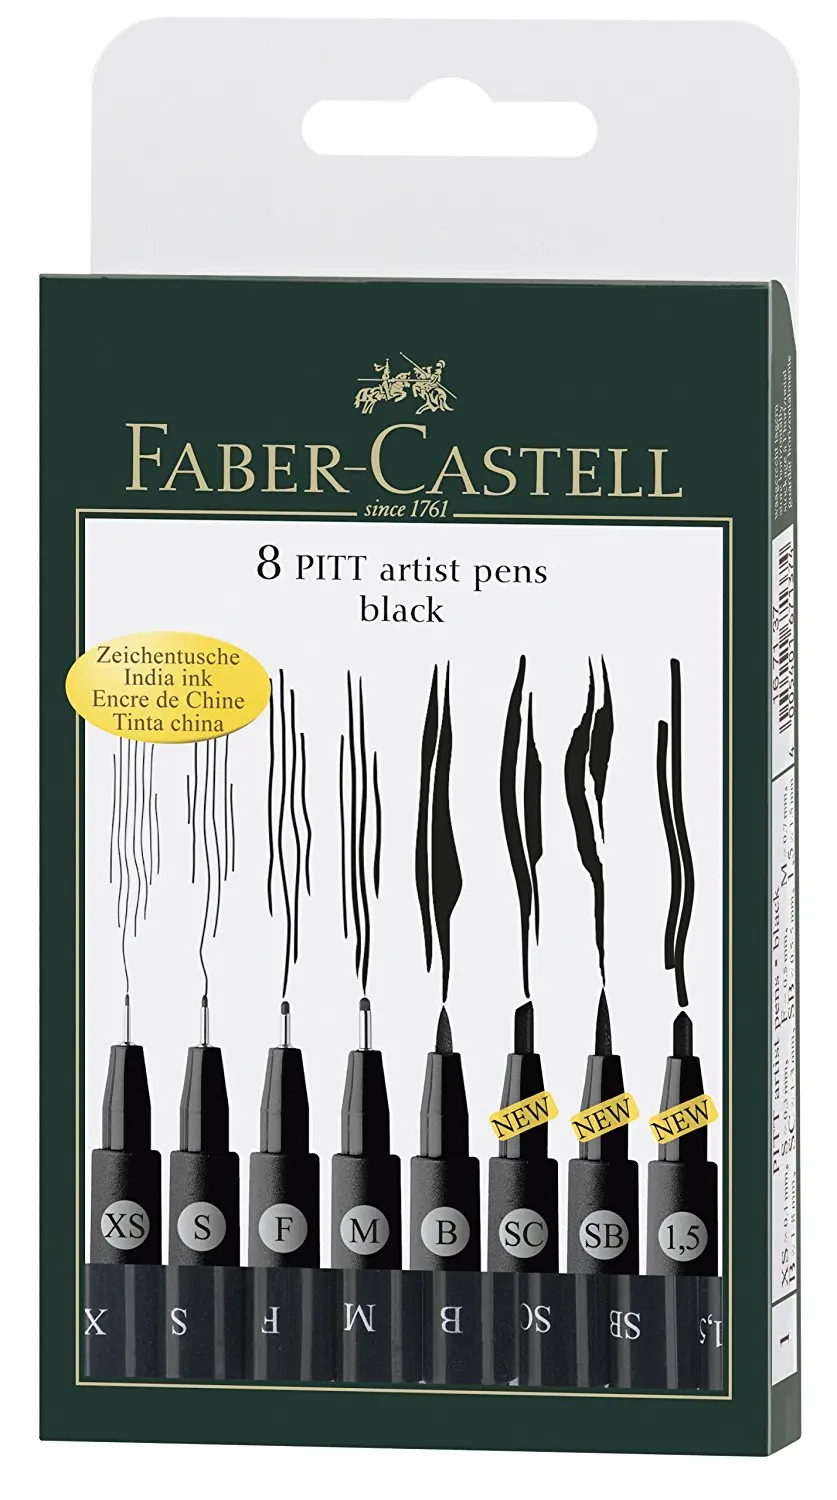 

Faber-Castell Pitt Artist Pen black Manga Detail Nibs Art Brush Marker Waterproof Pigma Micron Fine Line Set 01 03 05 07 10 15